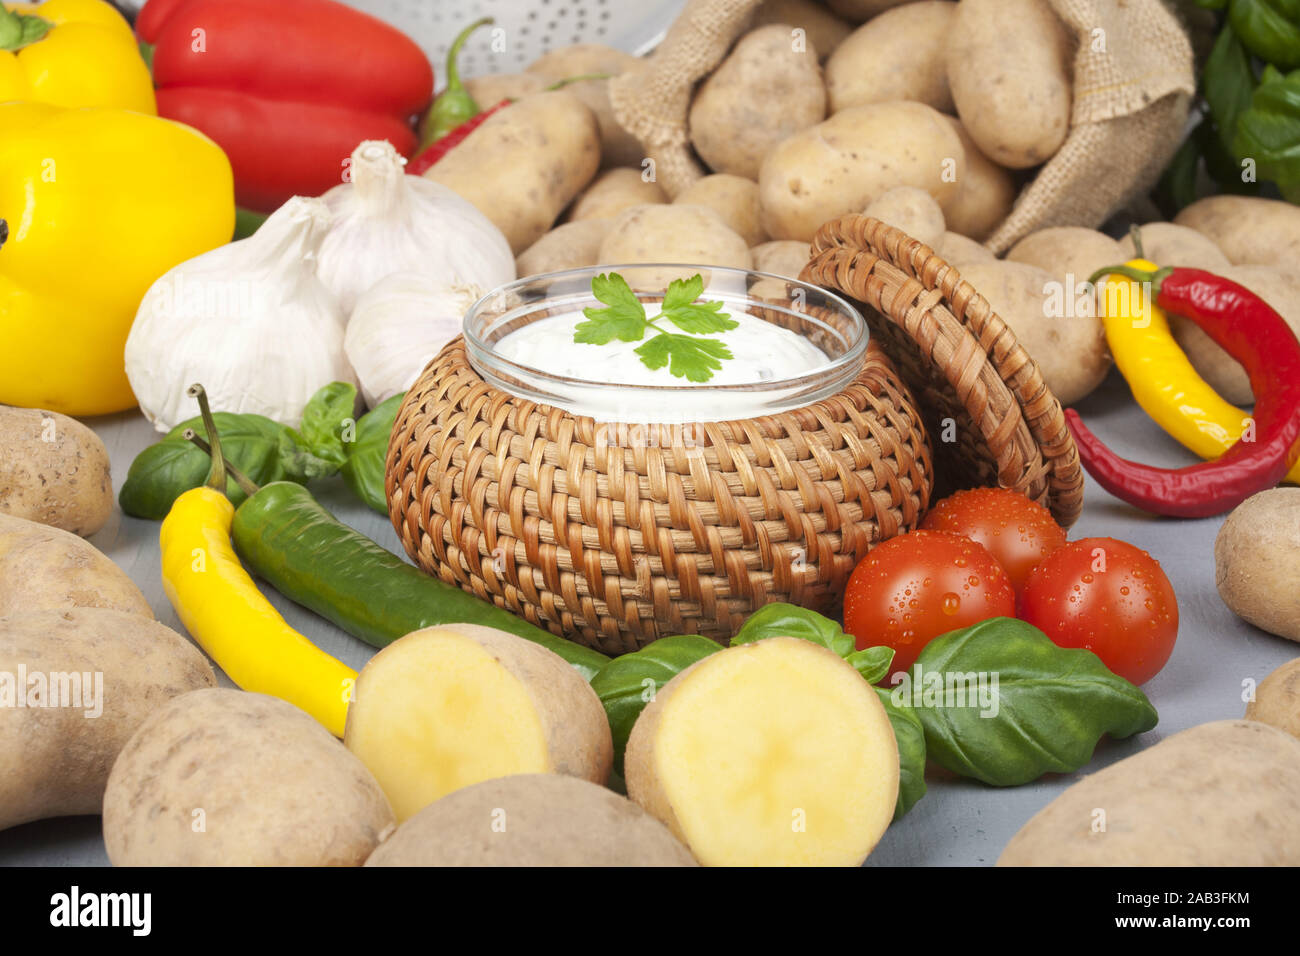 Kartoffeln mit Quark und Gemuese |Potatoes with cottage cheese and vegetables| Stock Photo